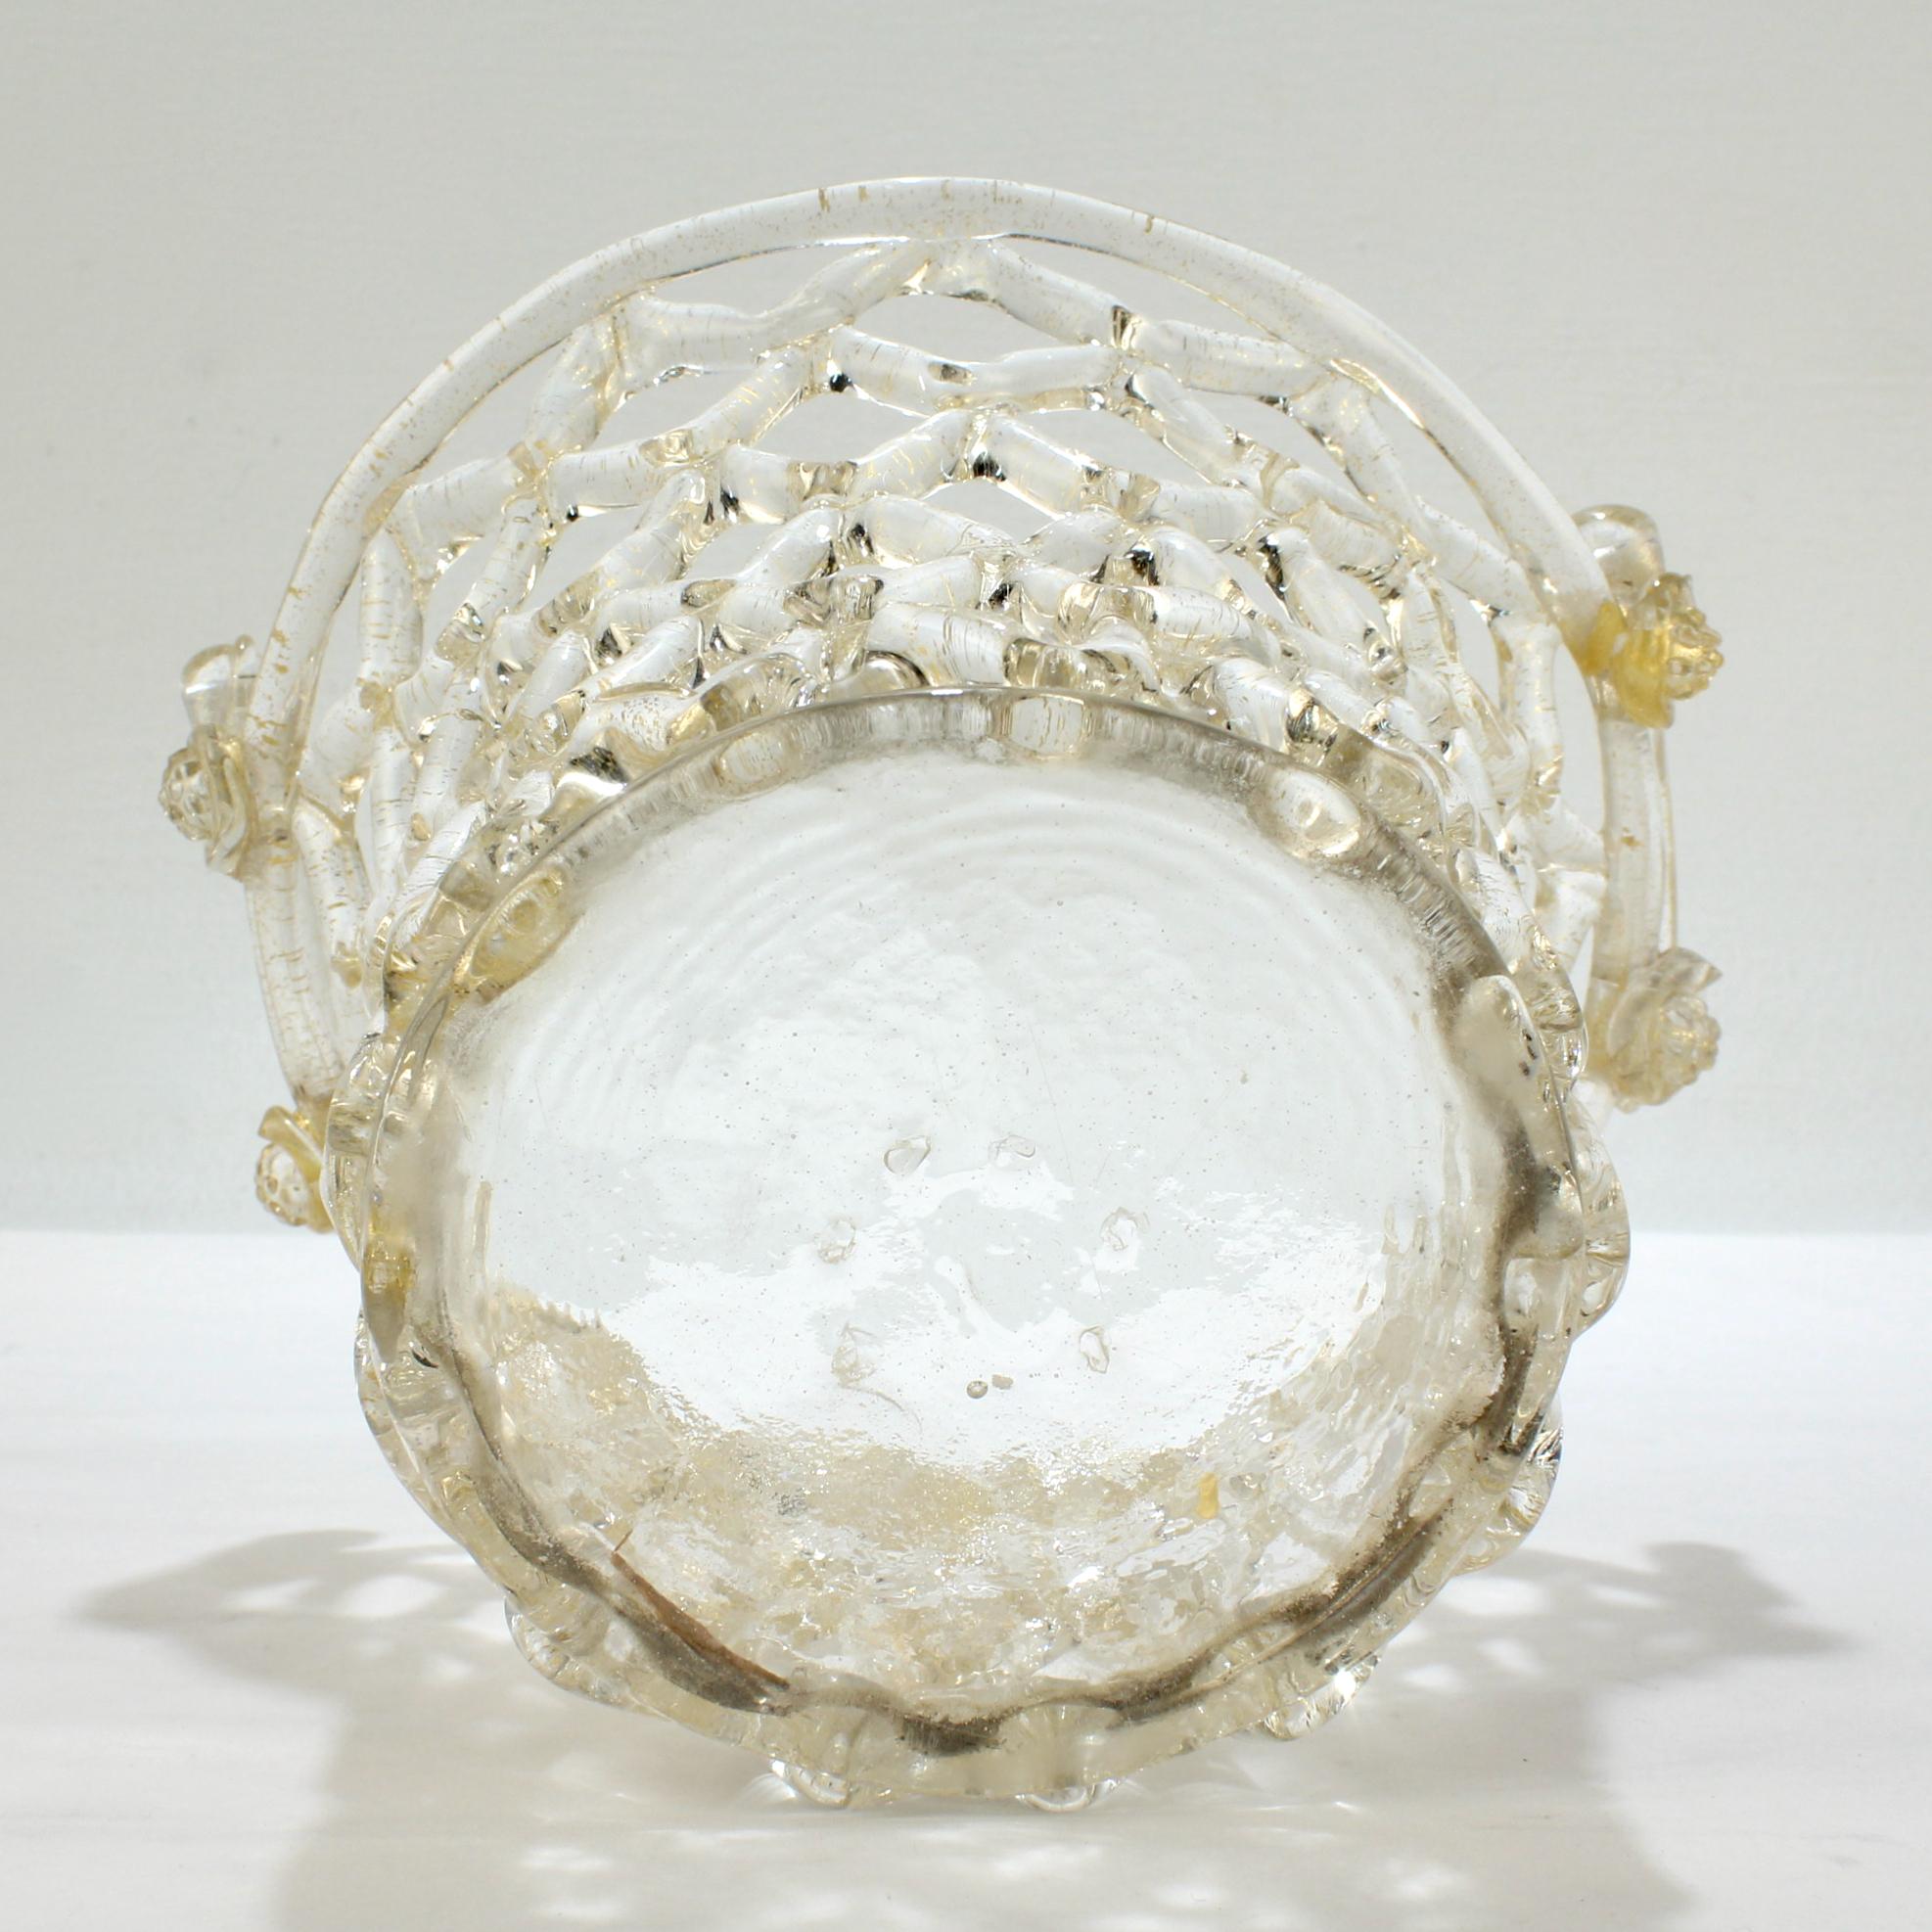 Art Glass Venetian or Murano Glass Liege a Traforato Openwork Basket with Gold Foil